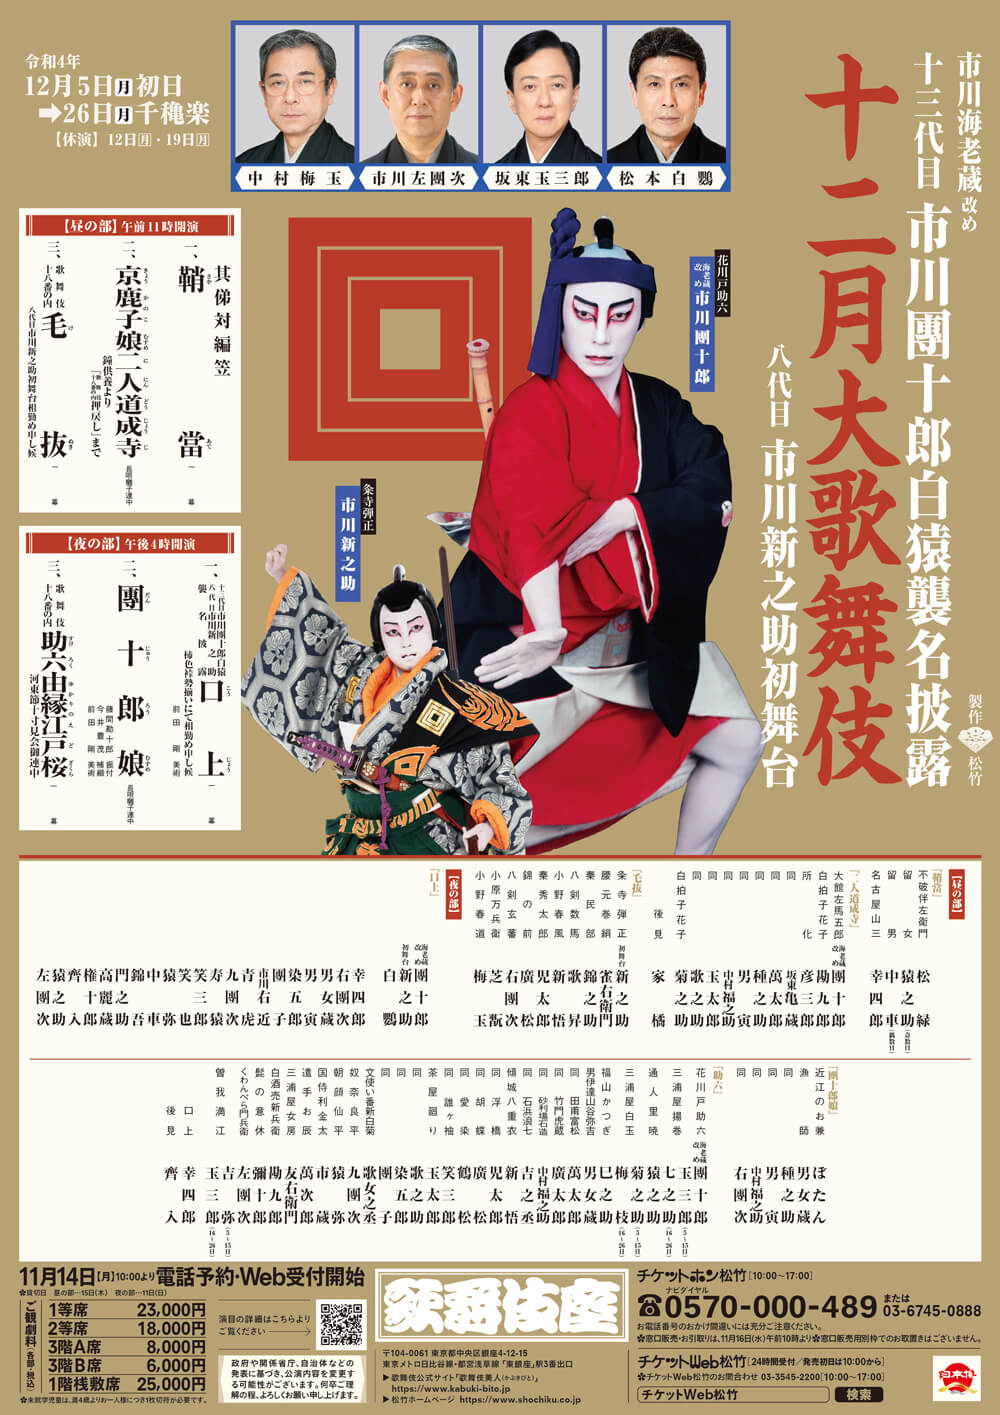 December Program at the kabukiza